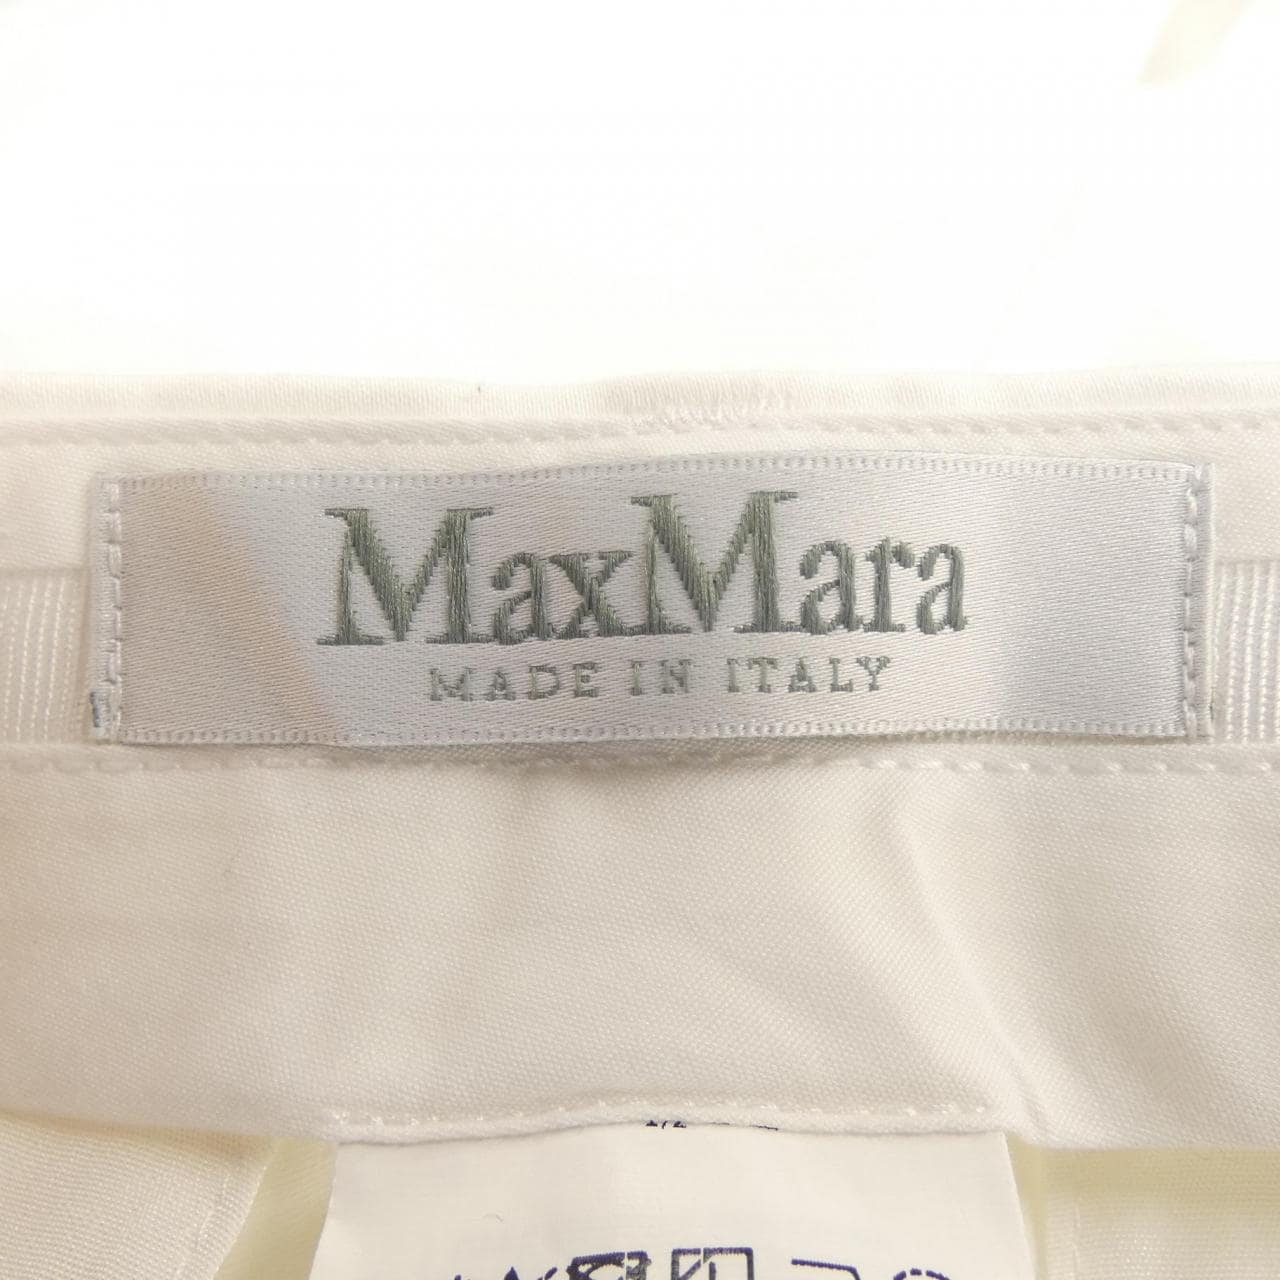 Max Mara馬克斯瑪拉褲